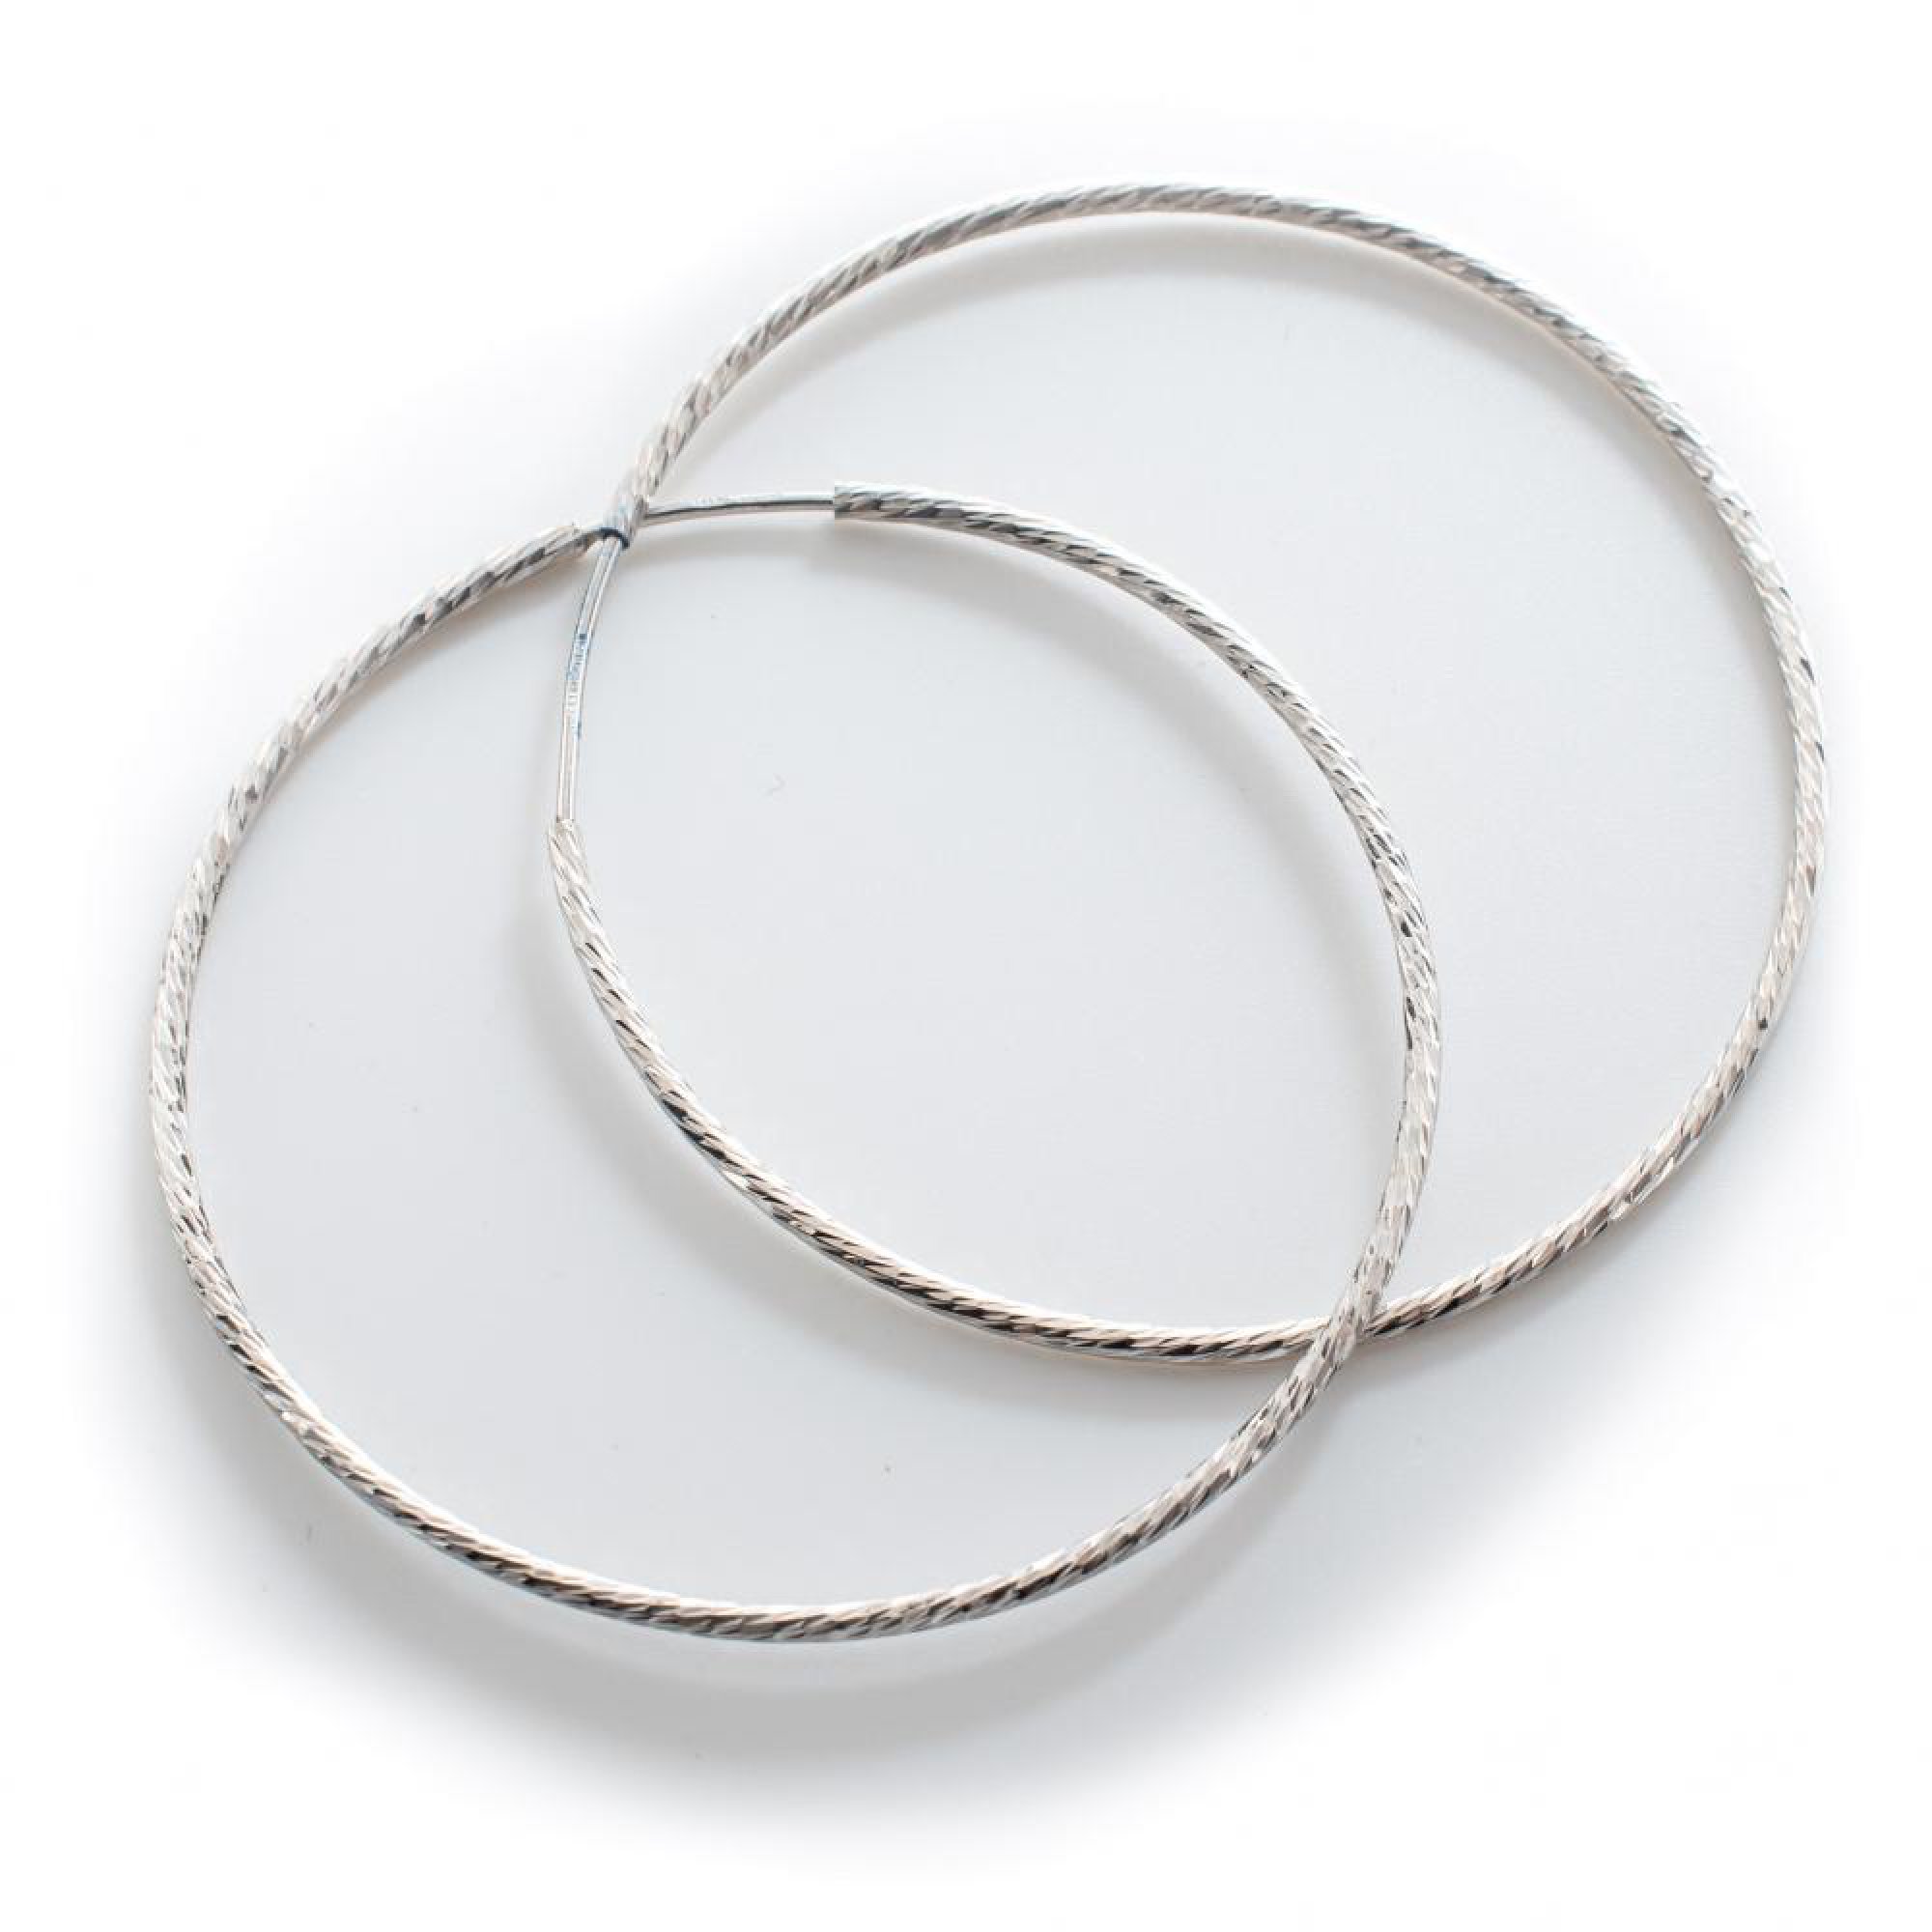 Silver engraved hoops (52mm)